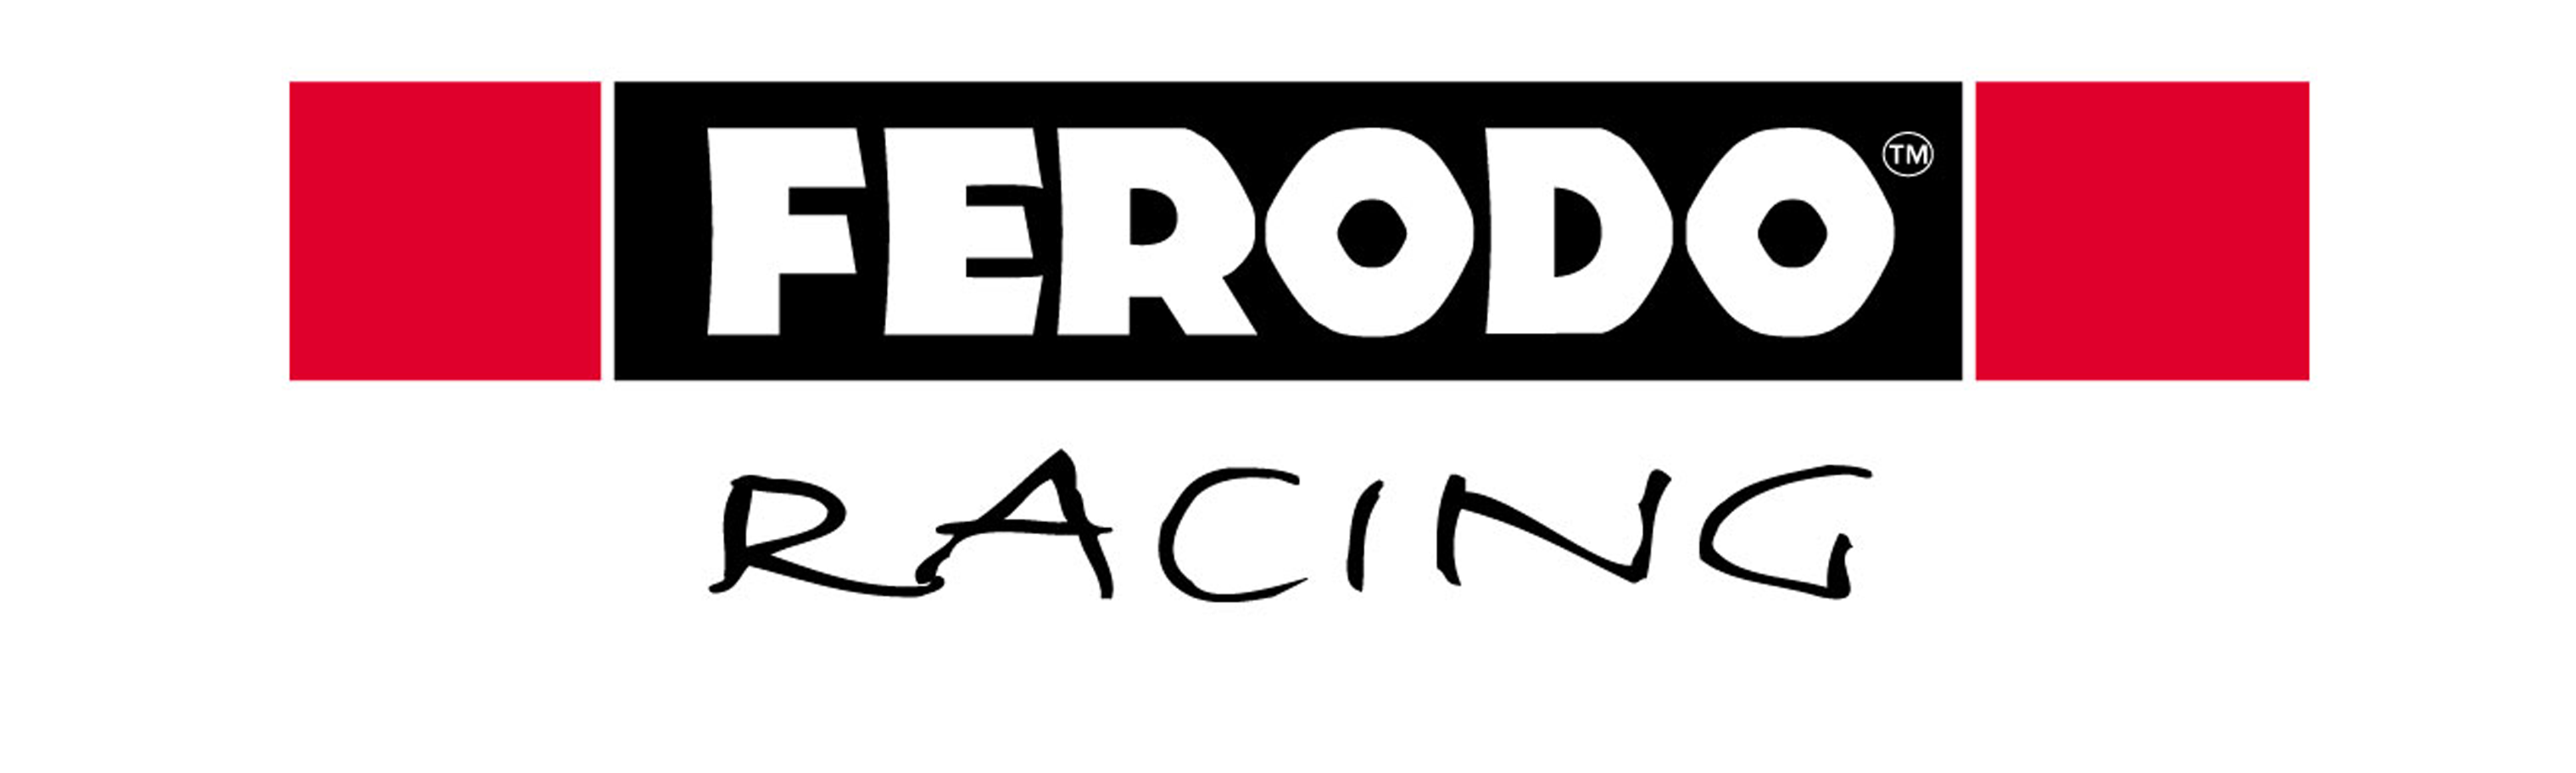 logo ferodo racing